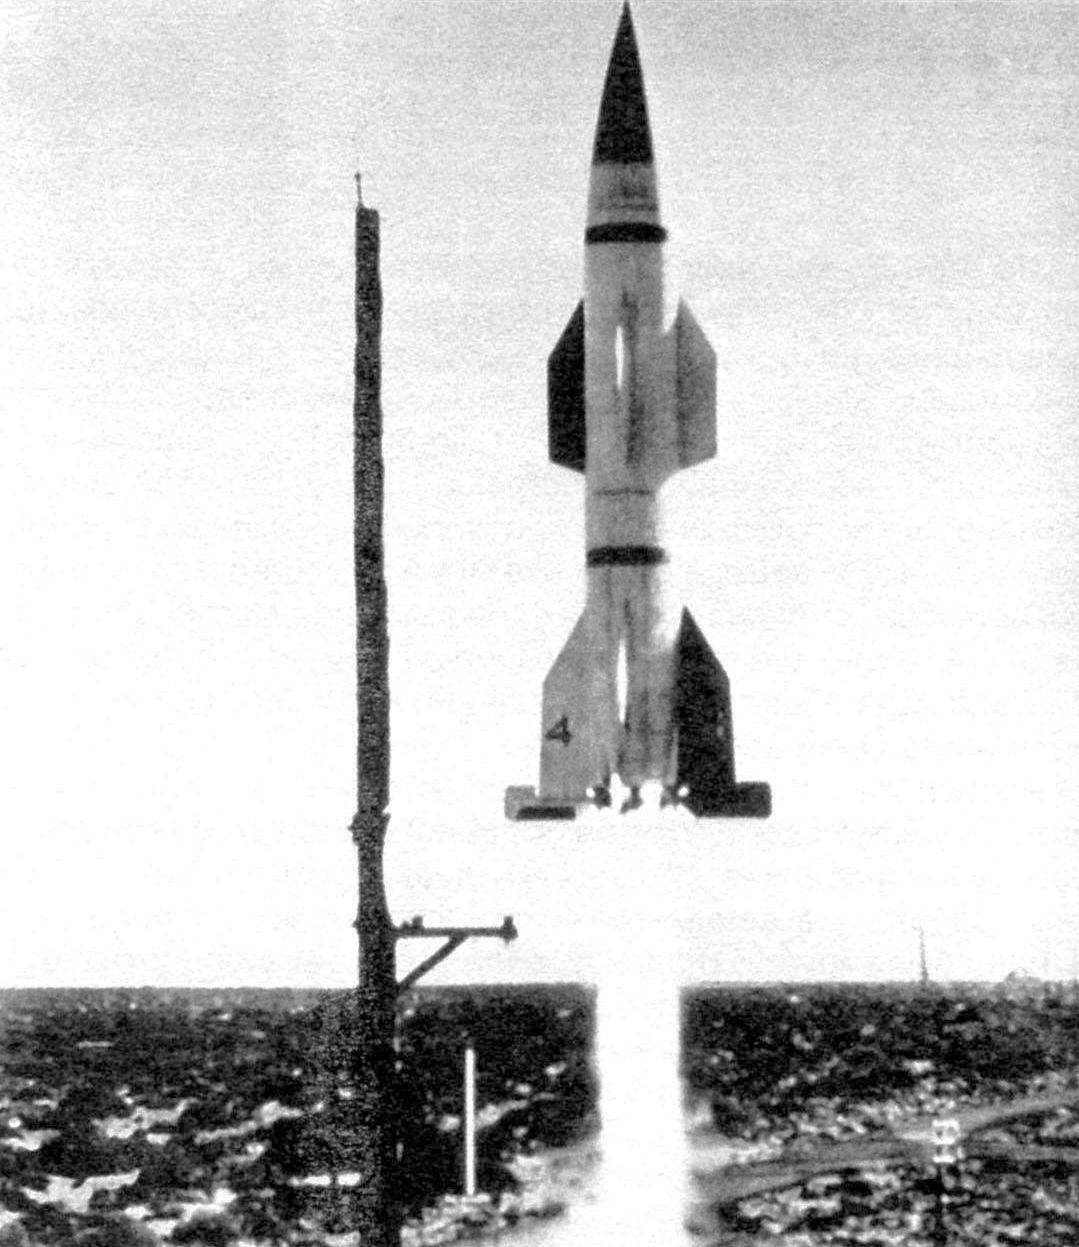 Первый пуск американского аналога ракеты Wasserfall - Hermes Al. Полигон Вайт Сэнд Проувин Граунд (White Sand Proving Ground - WSPG), 1 мая 1950 г.